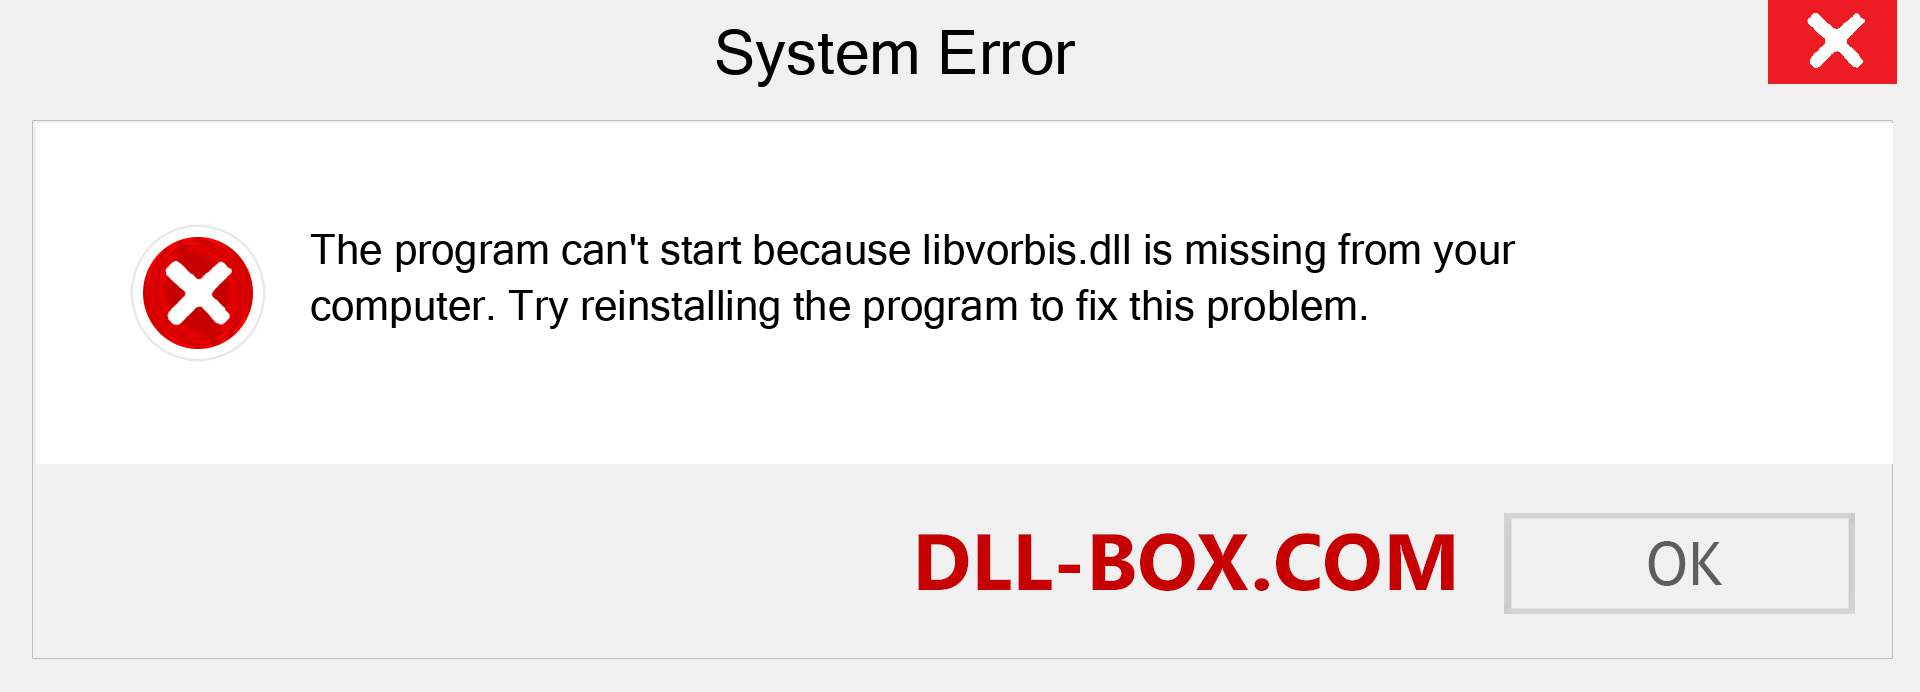  libvorbis.dll file is missing?. Download for Windows 7, 8, 10 - Fix  libvorbis dll Missing Error on Windows, photos, images